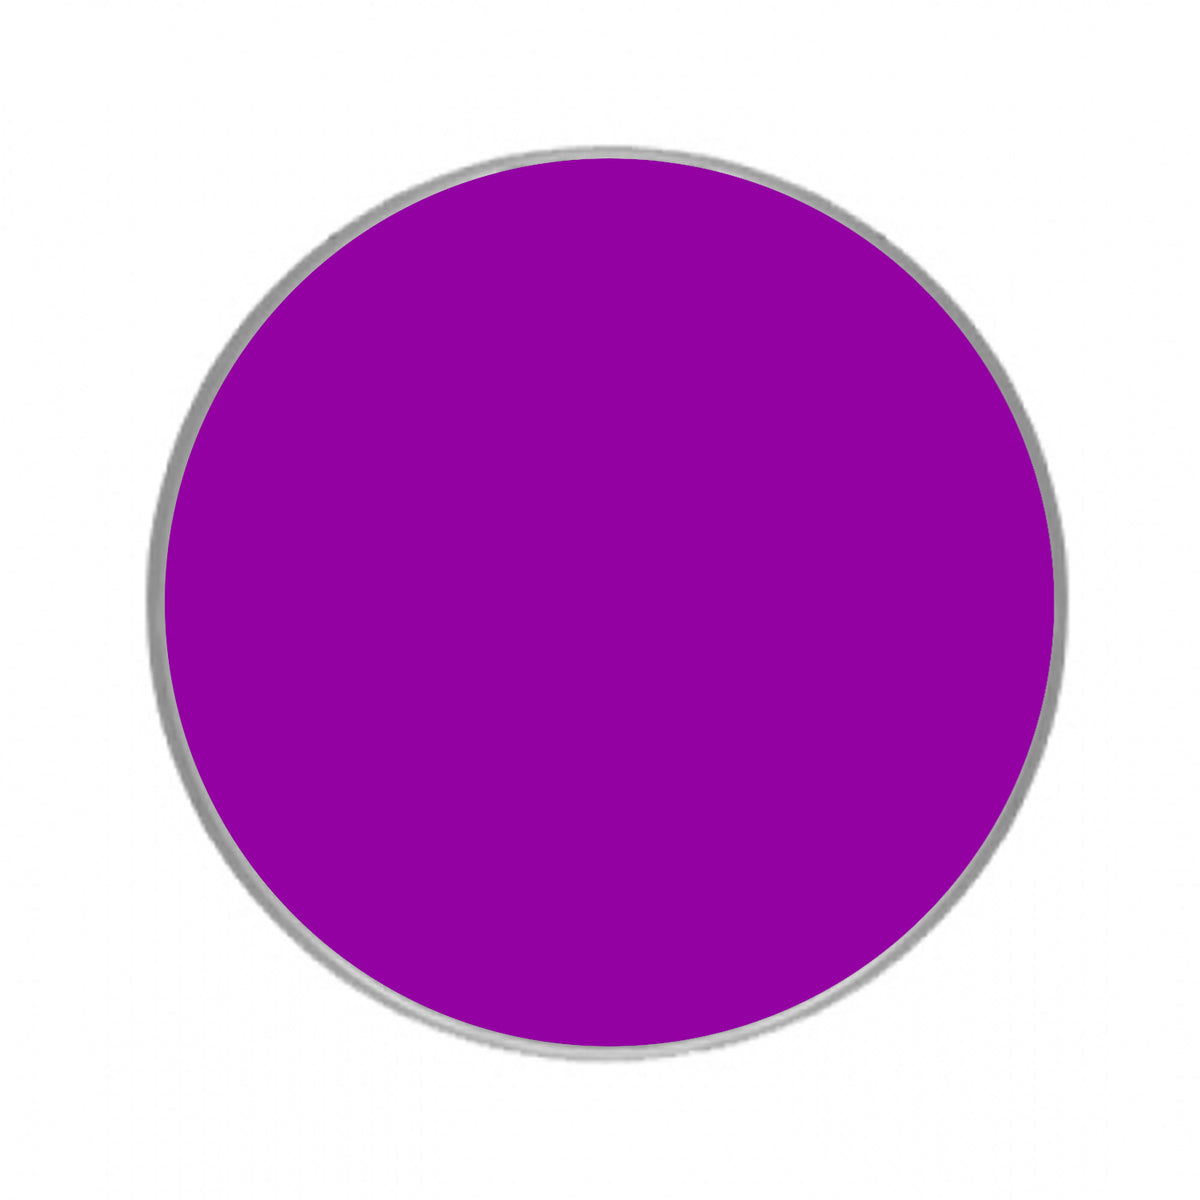 Kryolan Purple Aquacolor - UV-Dayglow Violet